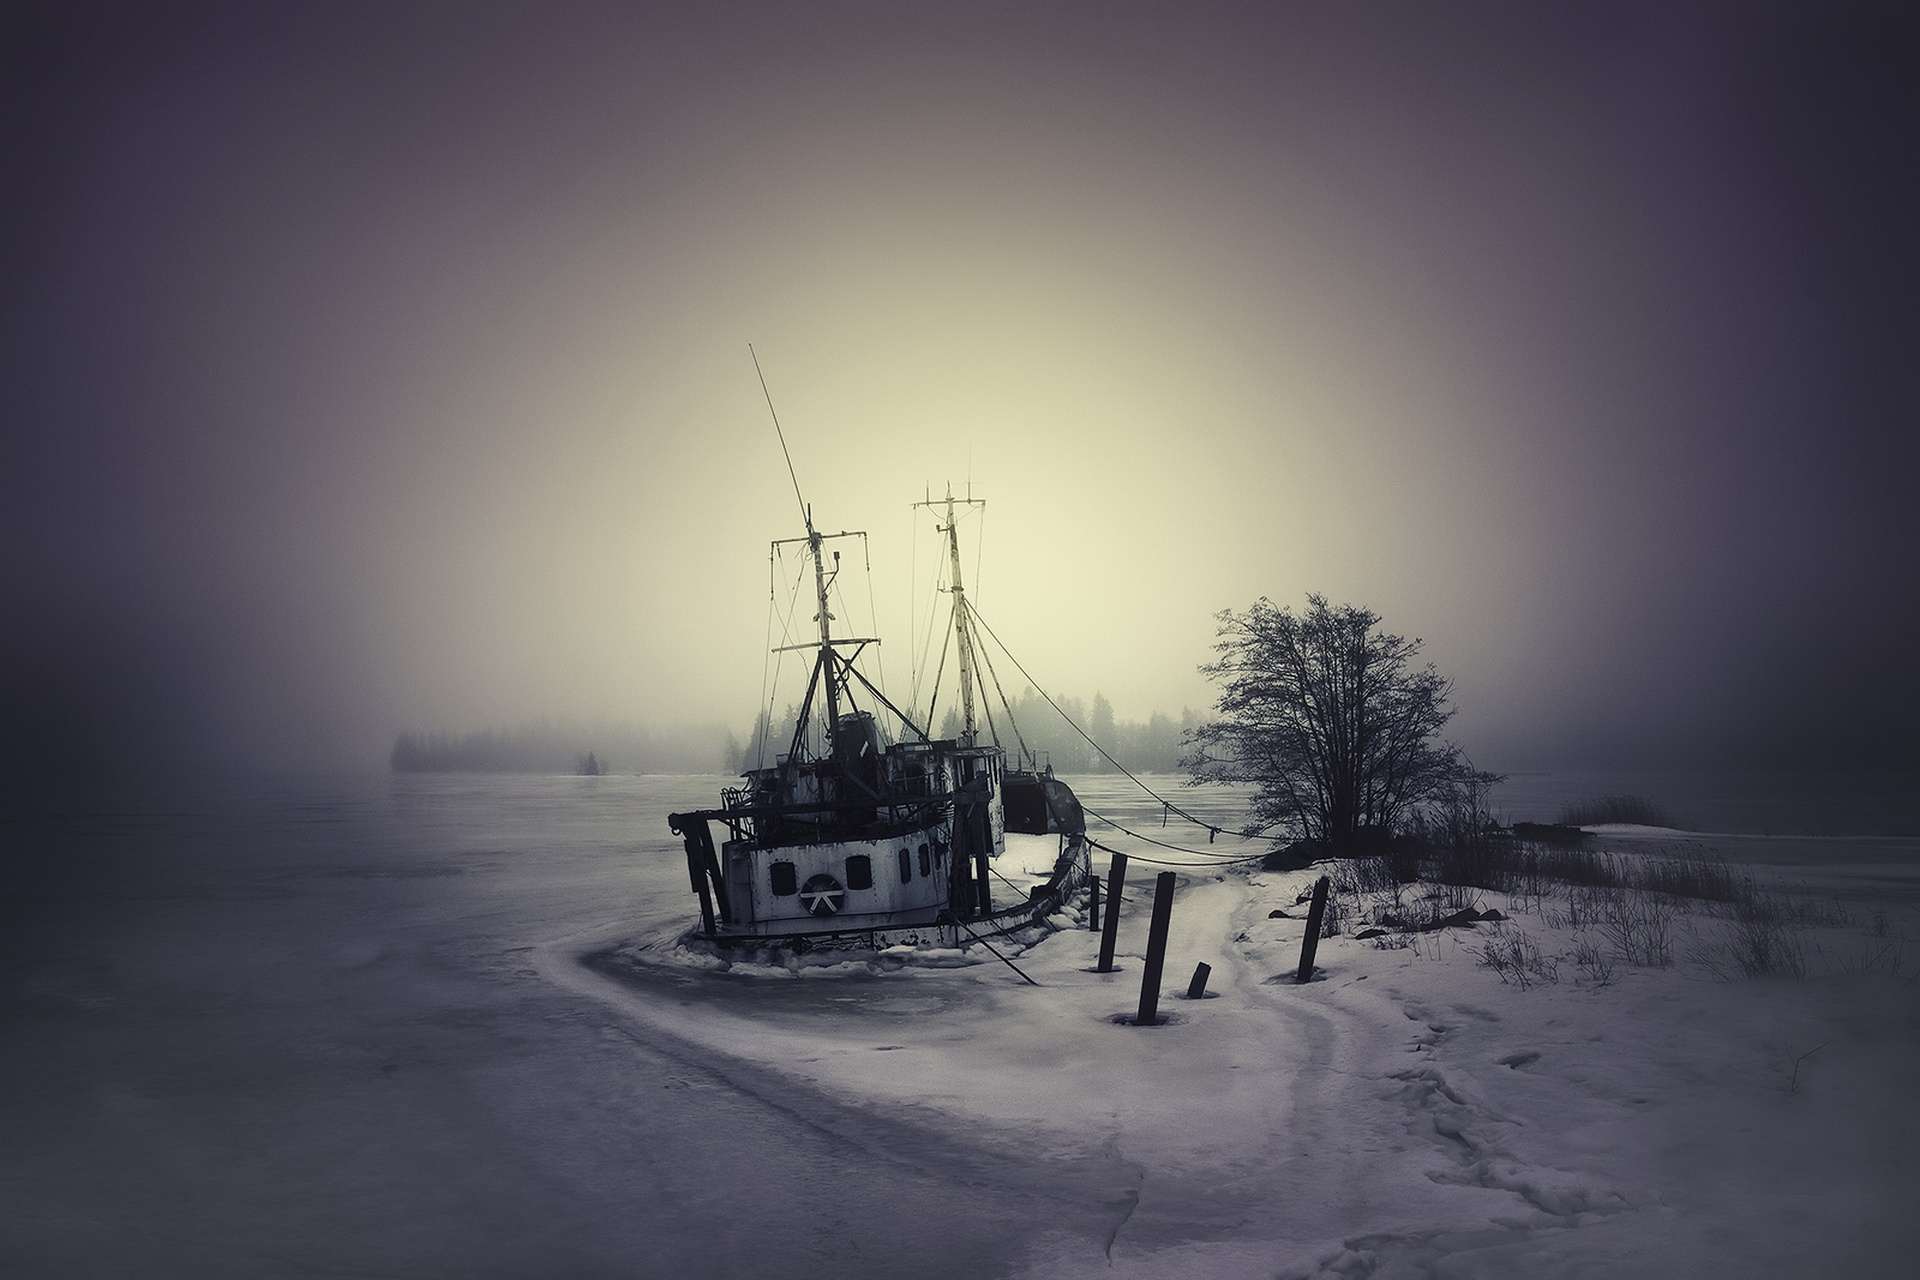 General 1920x1280 dark ice cold winter boat vehicle frozen lake shipwreck mist filter